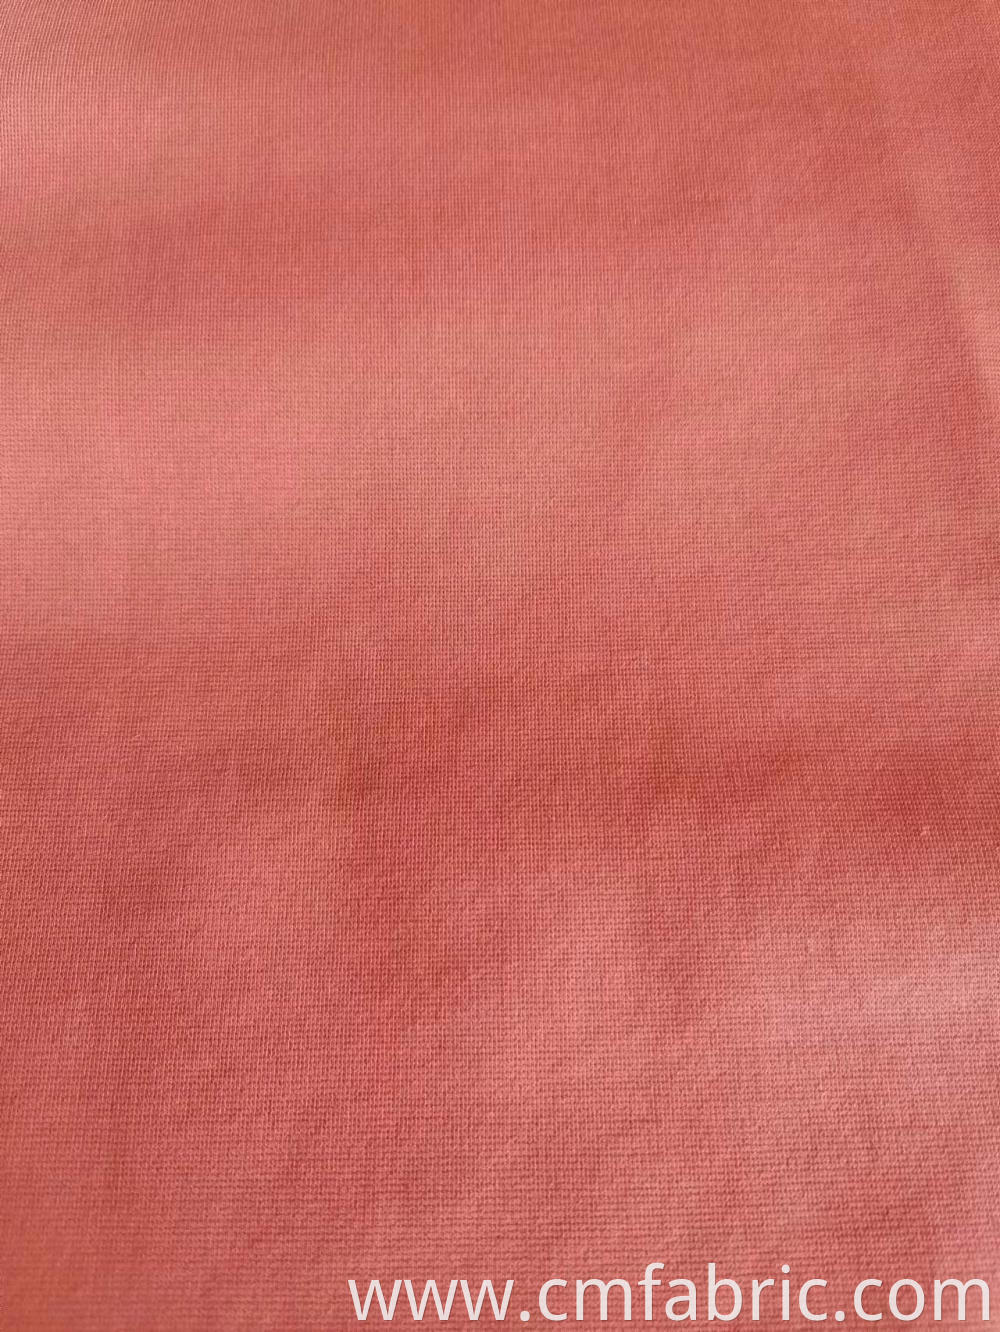 Cotton Nylon Spandex Ponti Roma Plain Dyed Fabric 3 Jpg